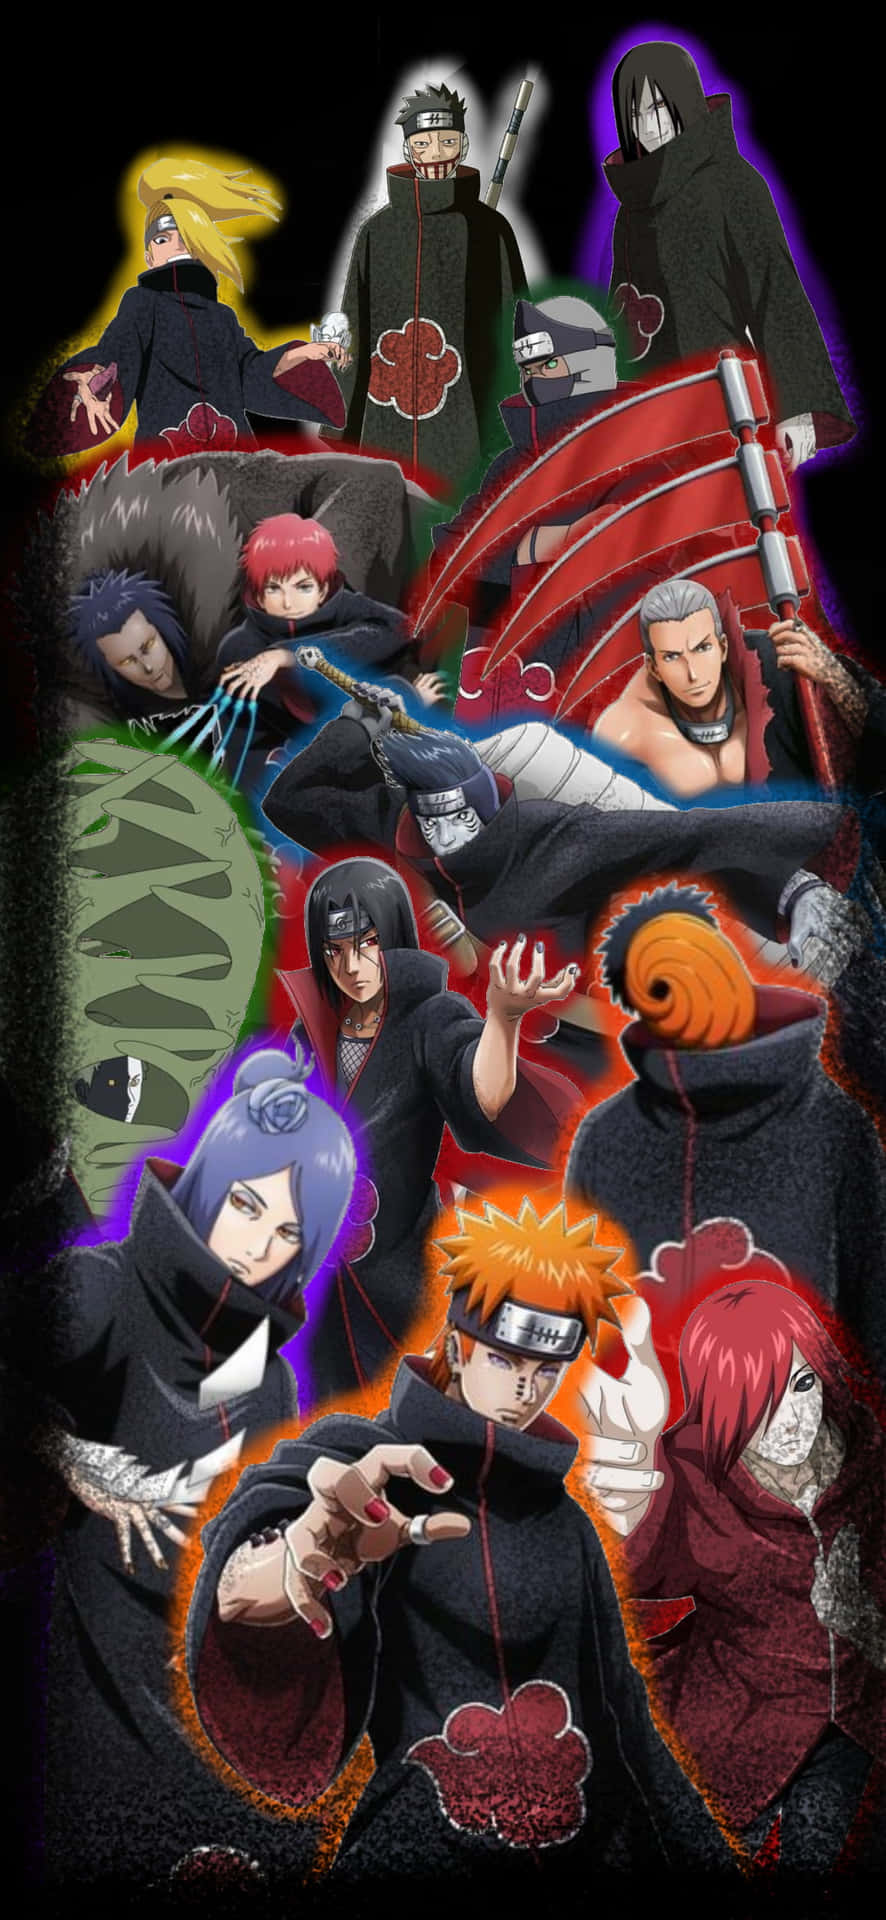 Picture of the Akatsuki Members in Naruto Anime Wallpaper